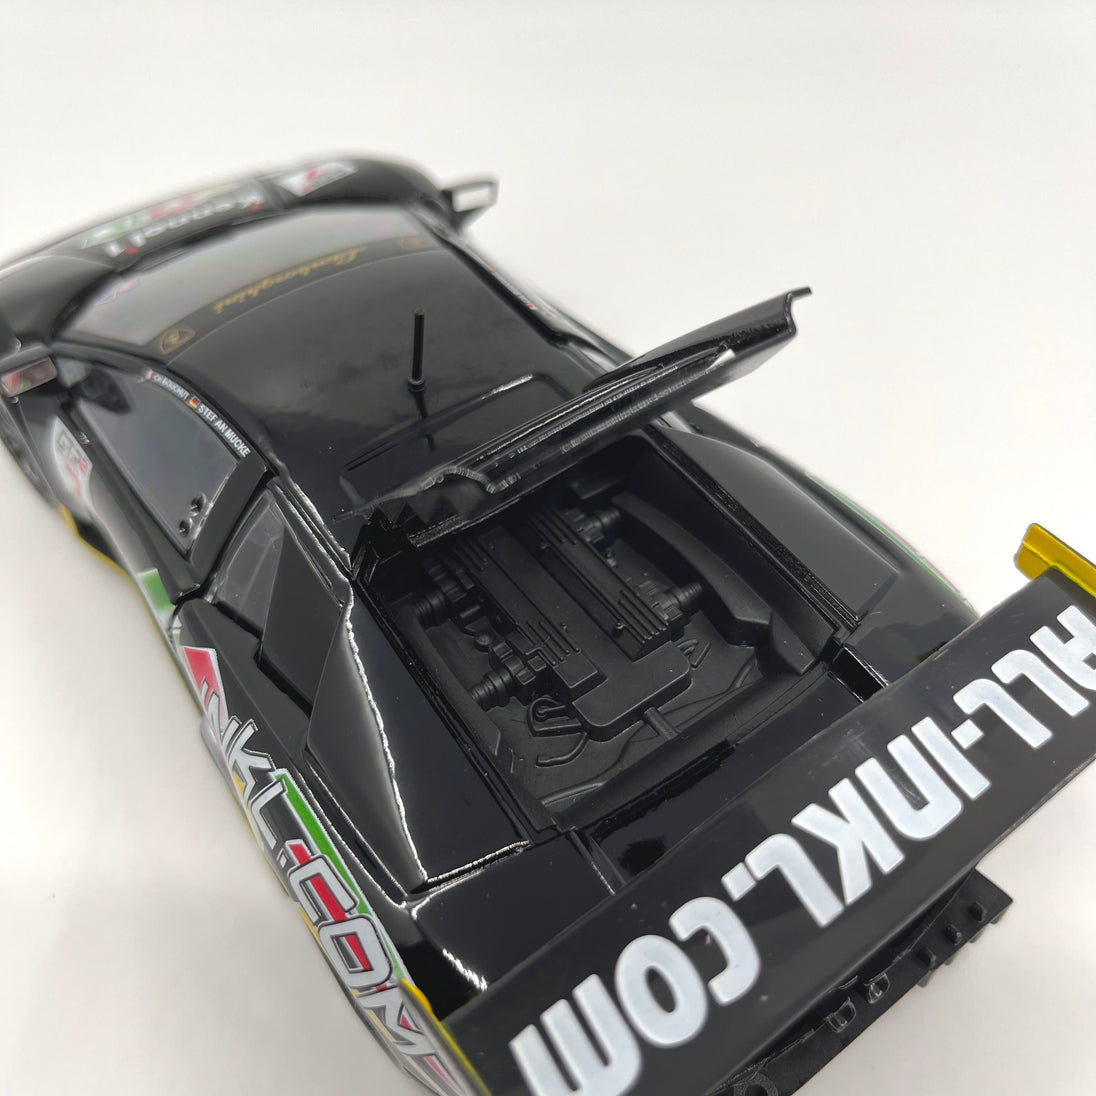 Lamborghini Murcielago FIA GT 1:24 Diecast Race Car Model By Bburago